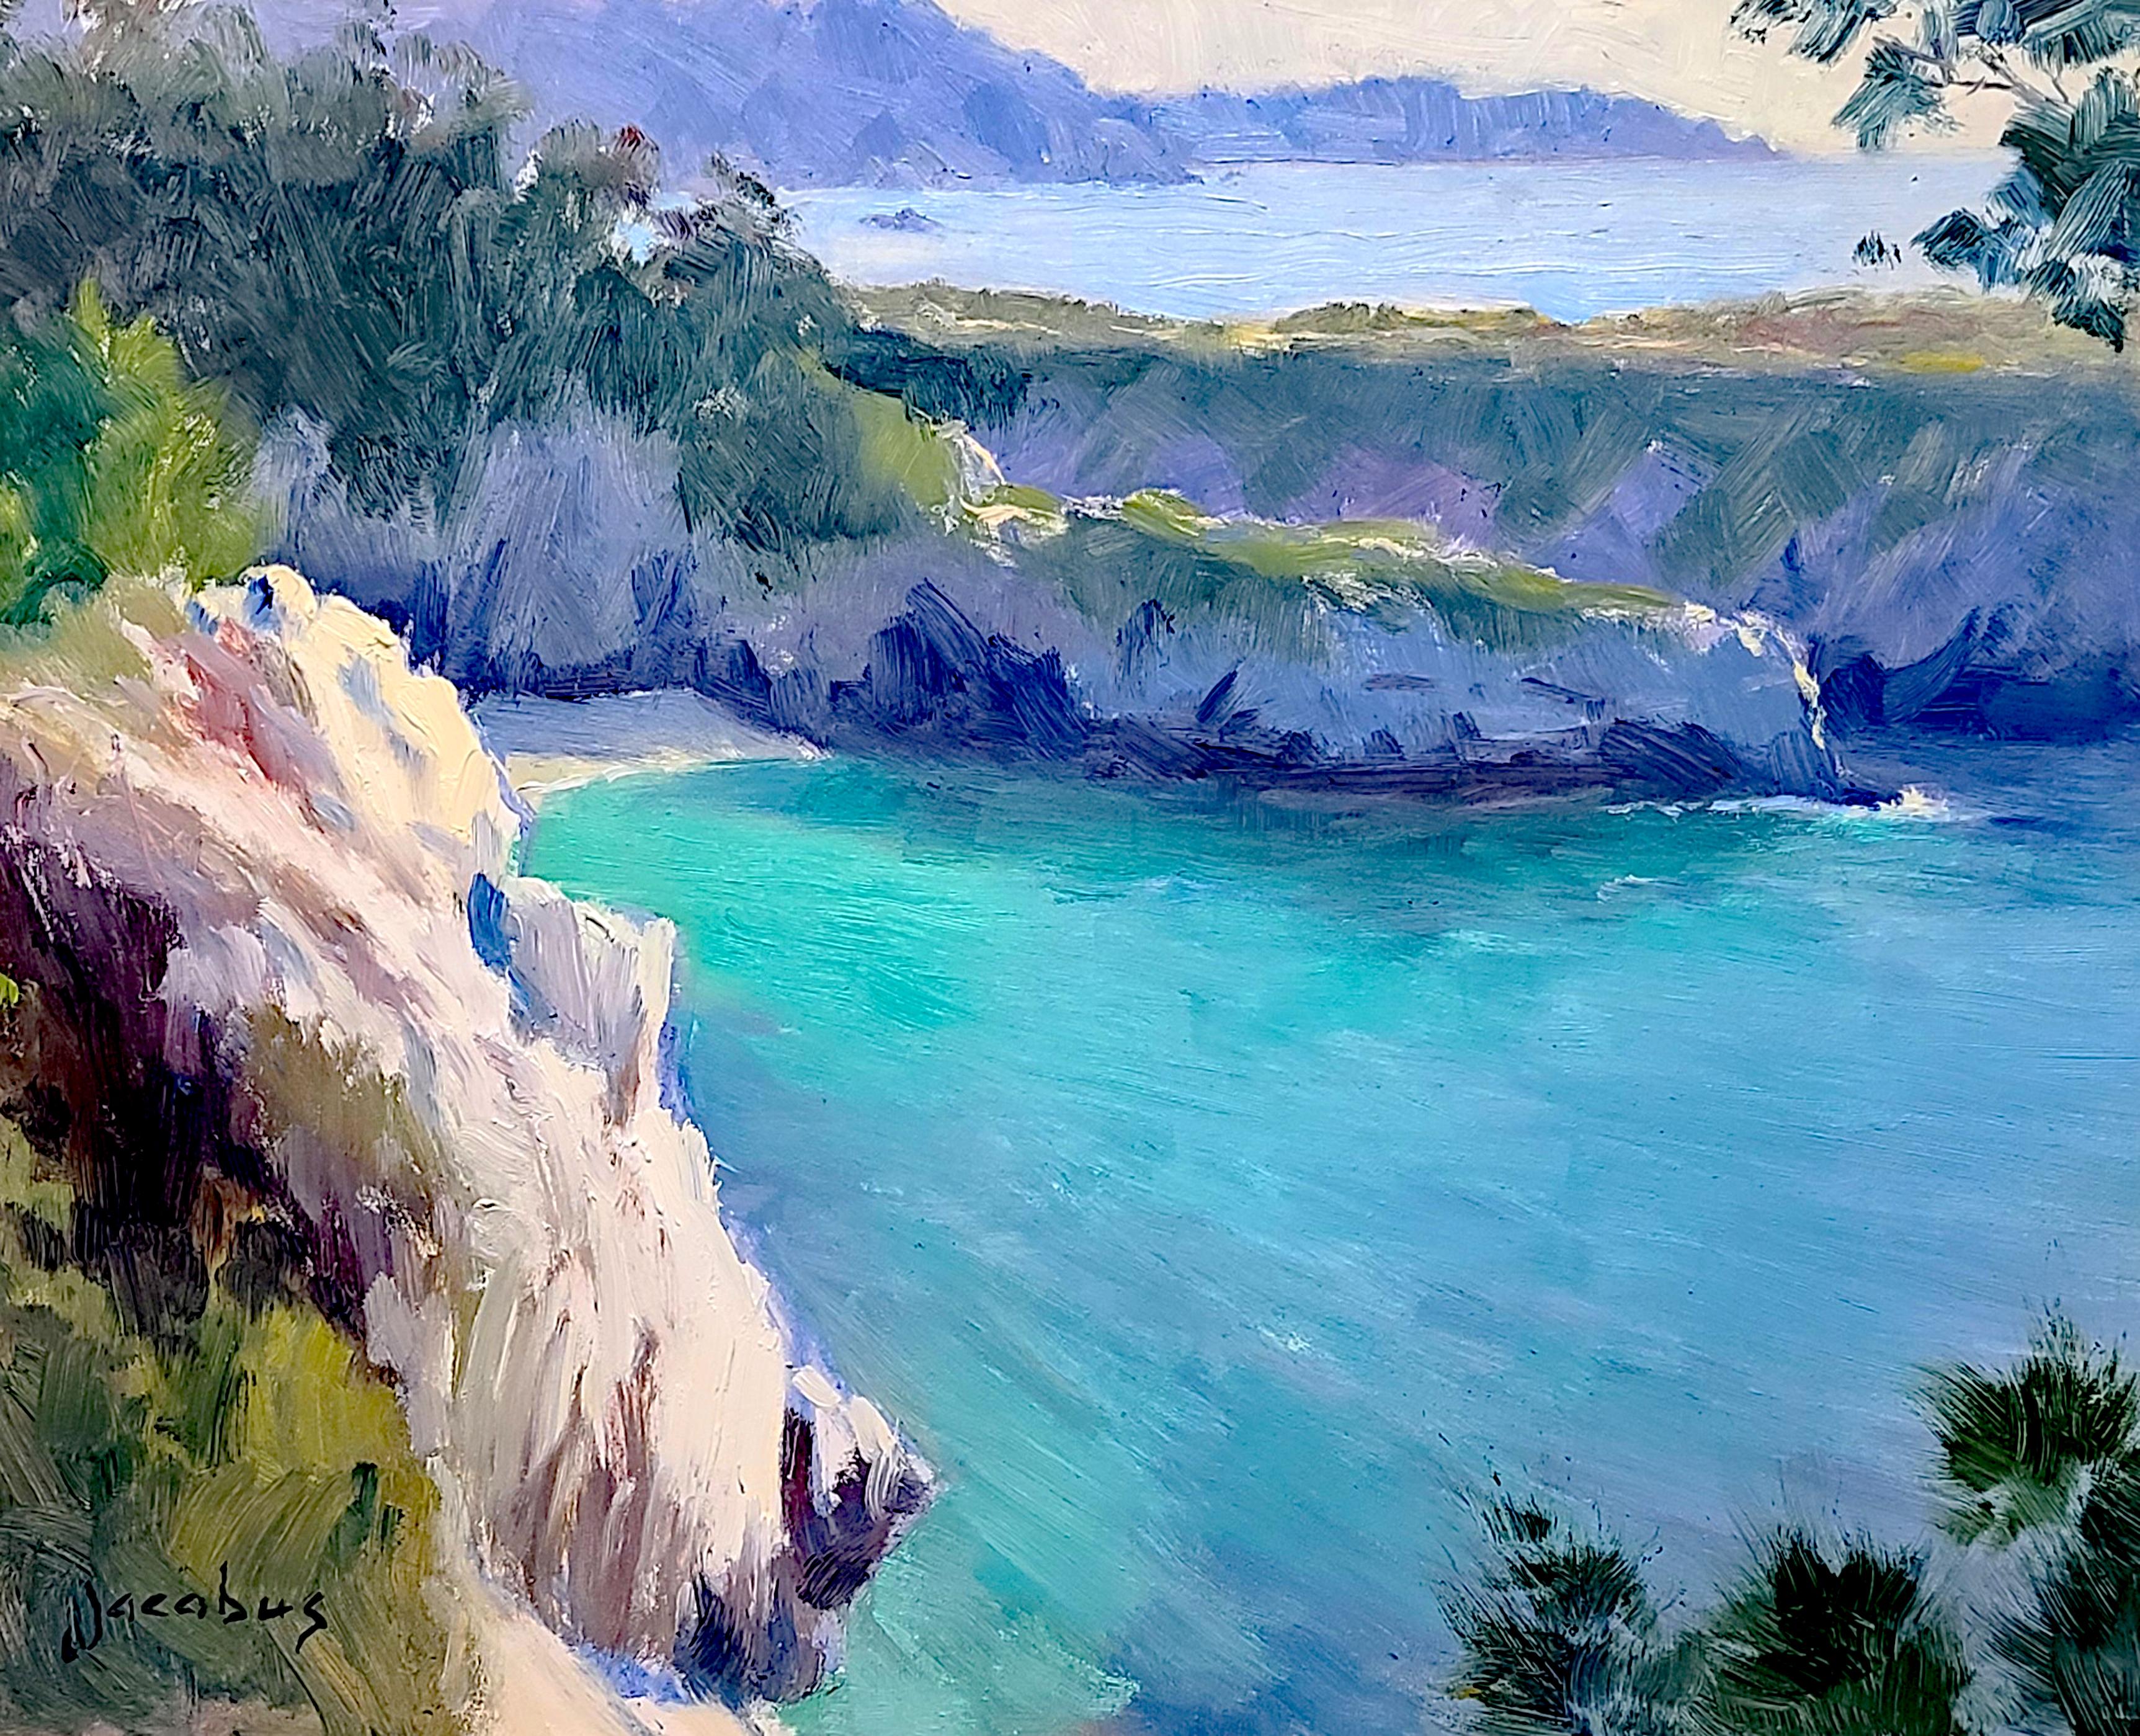 Jacobus Baas Landscape Painting - "China Cove, Point Lobos" Central California Coastal Scene